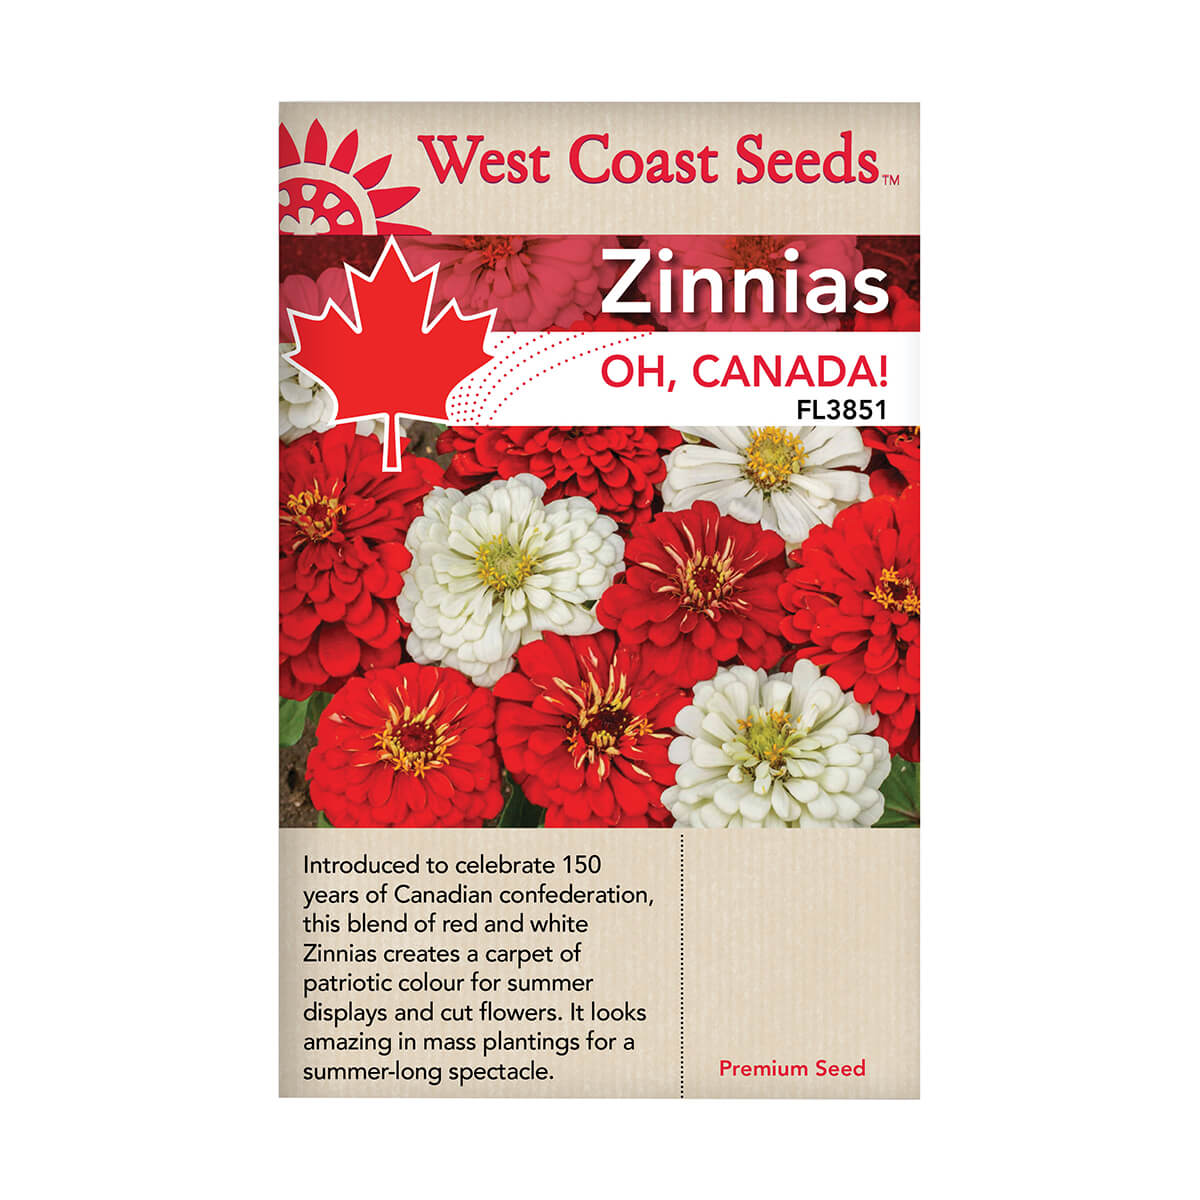 Oh Canada Zinnia Blend Seeds - approx. 150 seeds